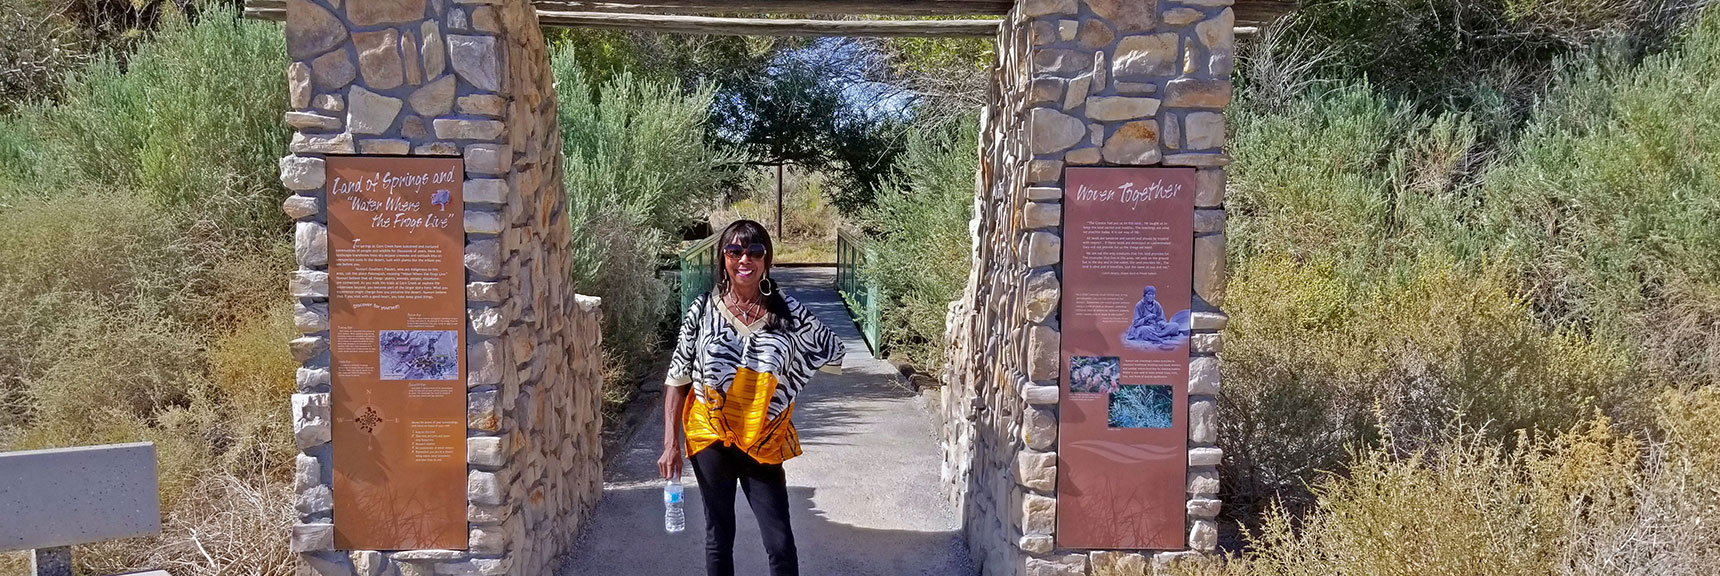 Beautiful Nature Walkway Amid Springs in the Desert | Visitor Center | Desert National Wildlife Refuge, Nevada